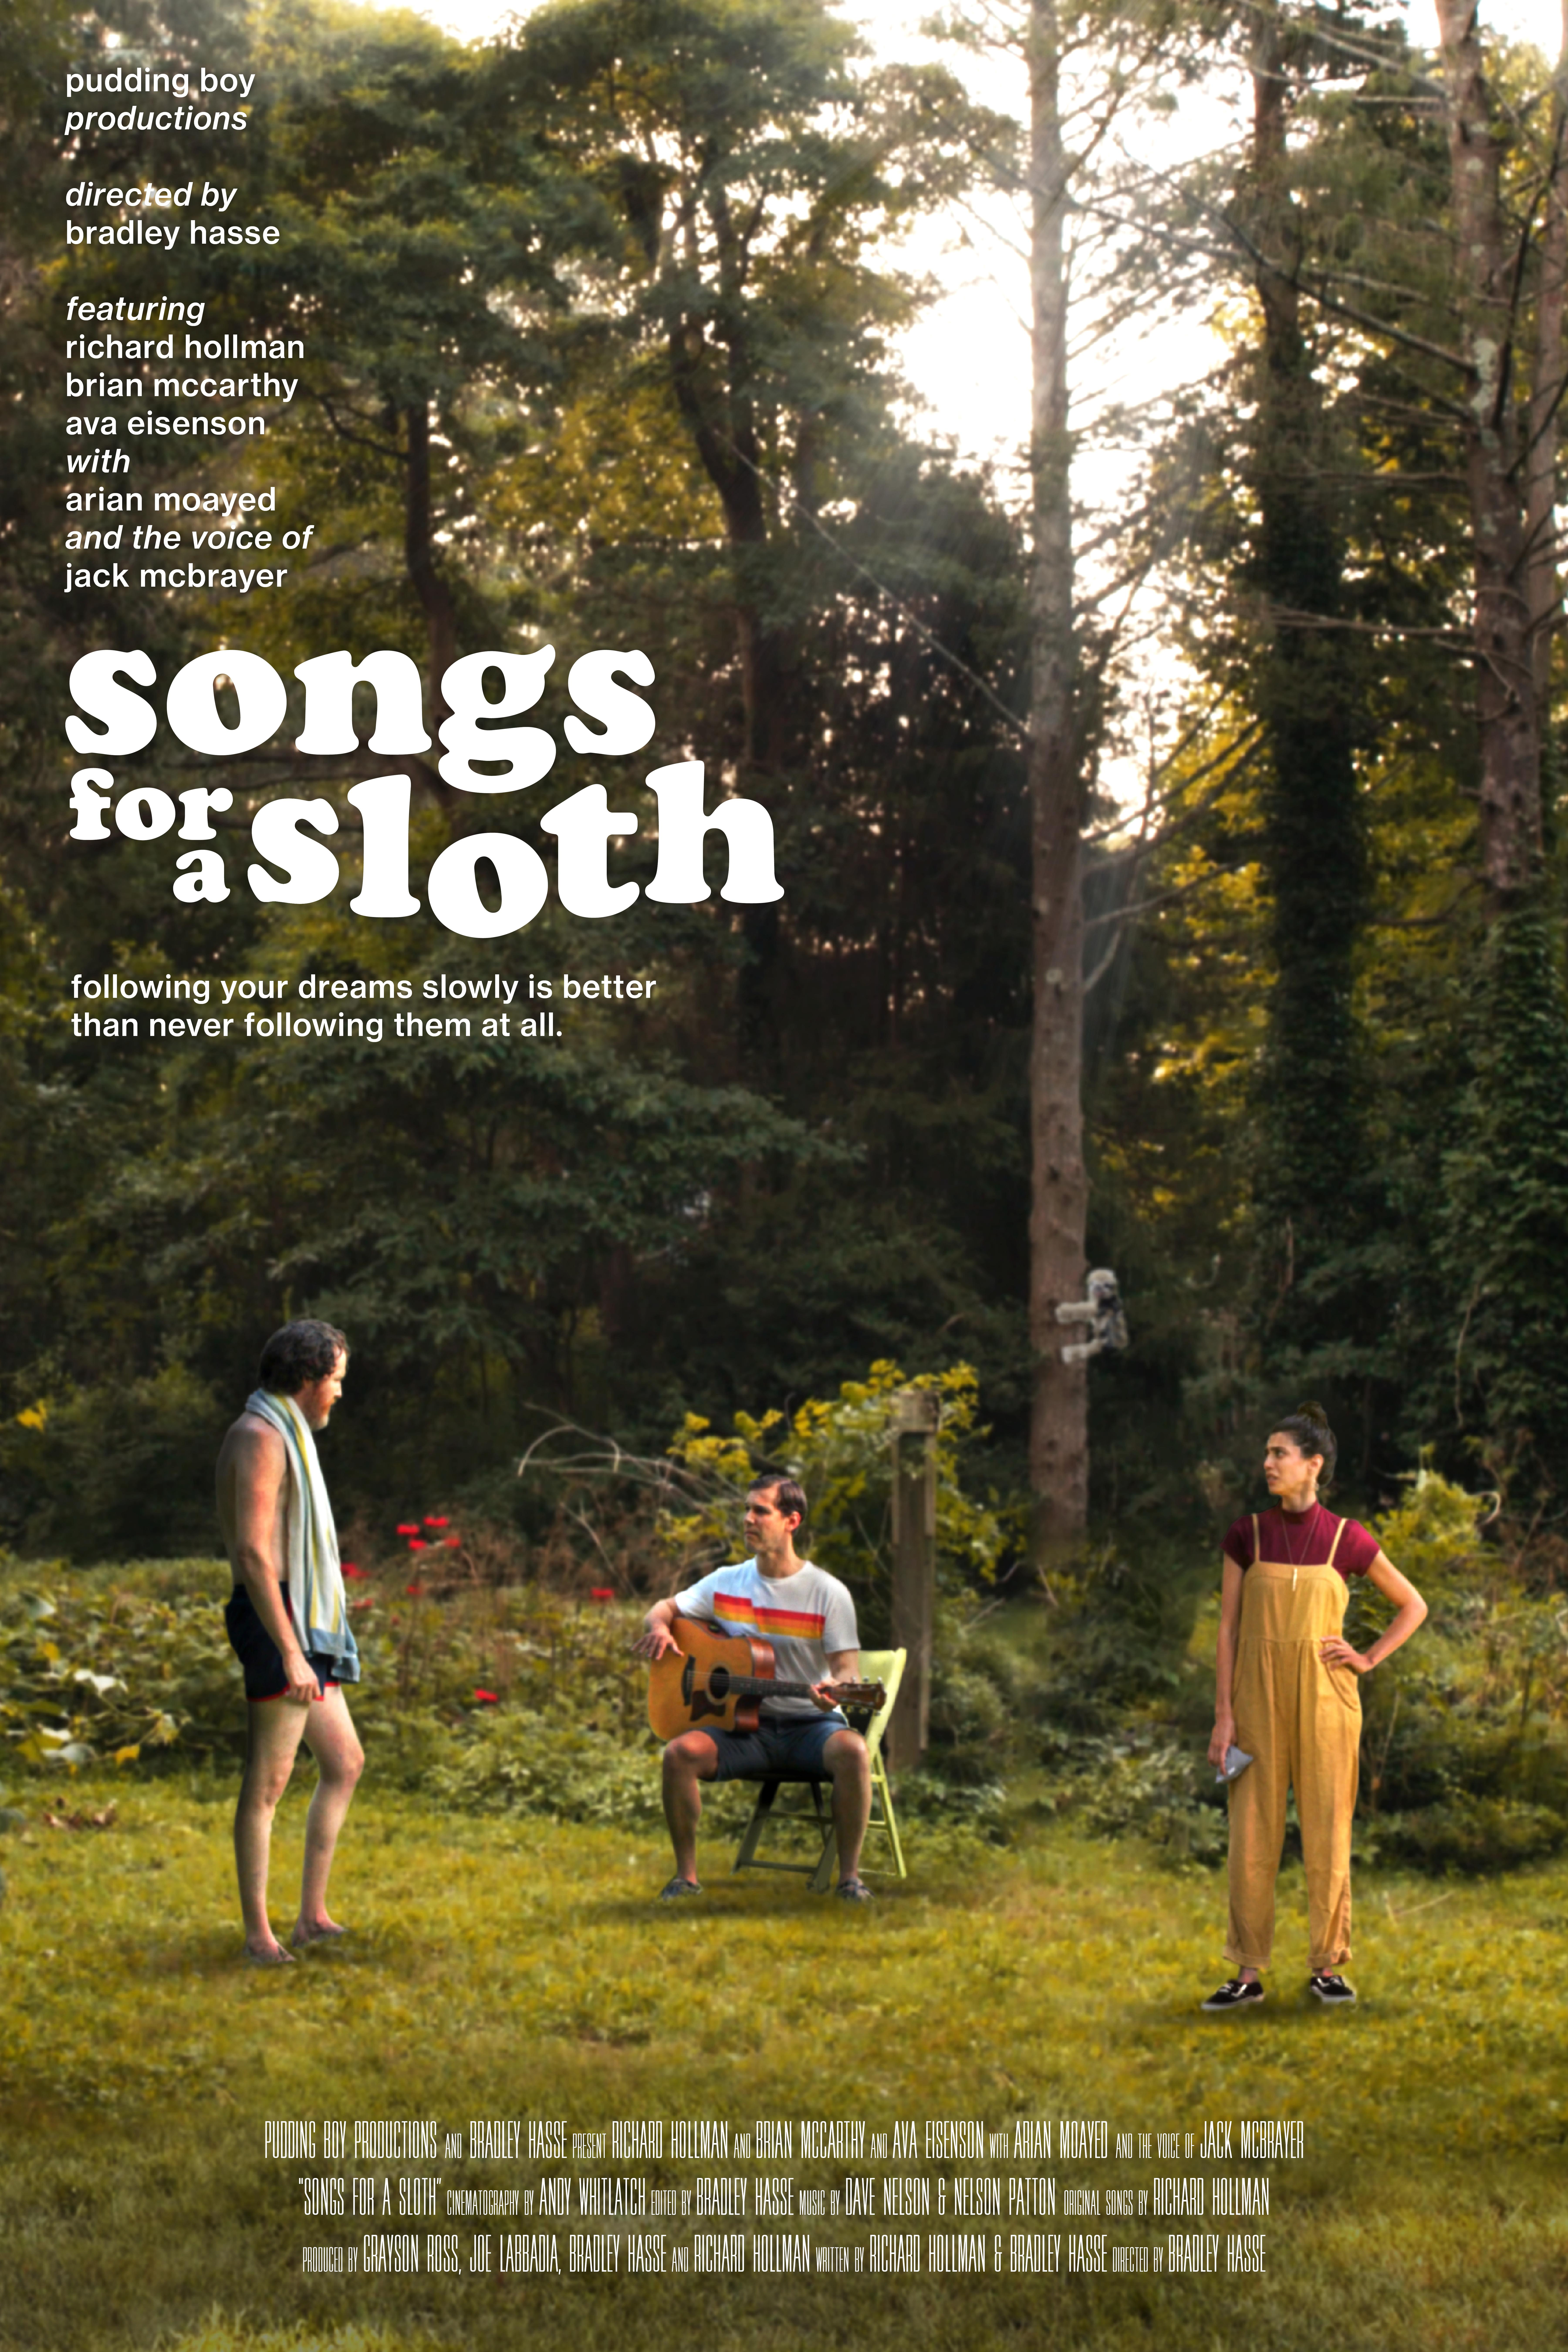 Nonton film Songs for a Sloth layarkaca21 indoxx1 ganool online streaming terbaru